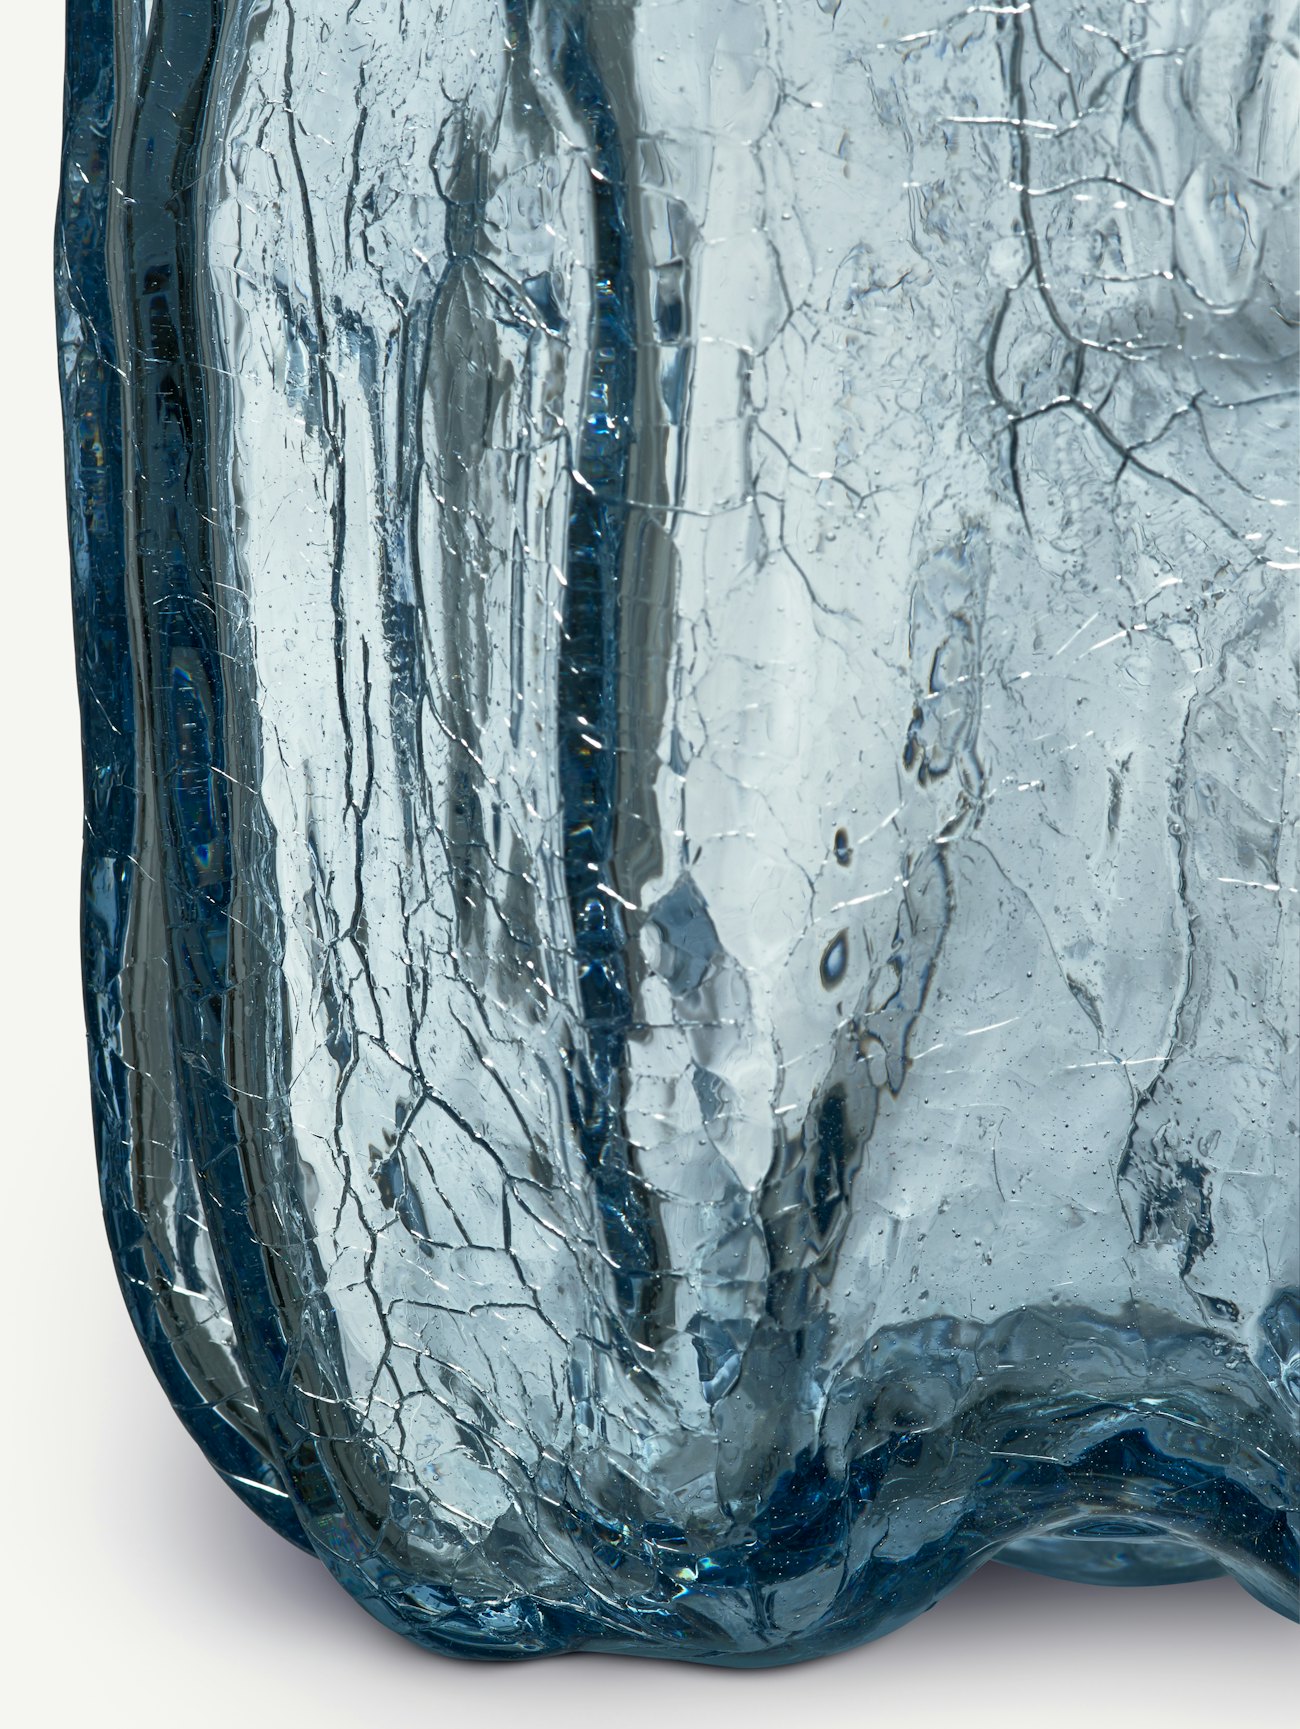 Crackle vase circular glass 270mm | Kosta Boda